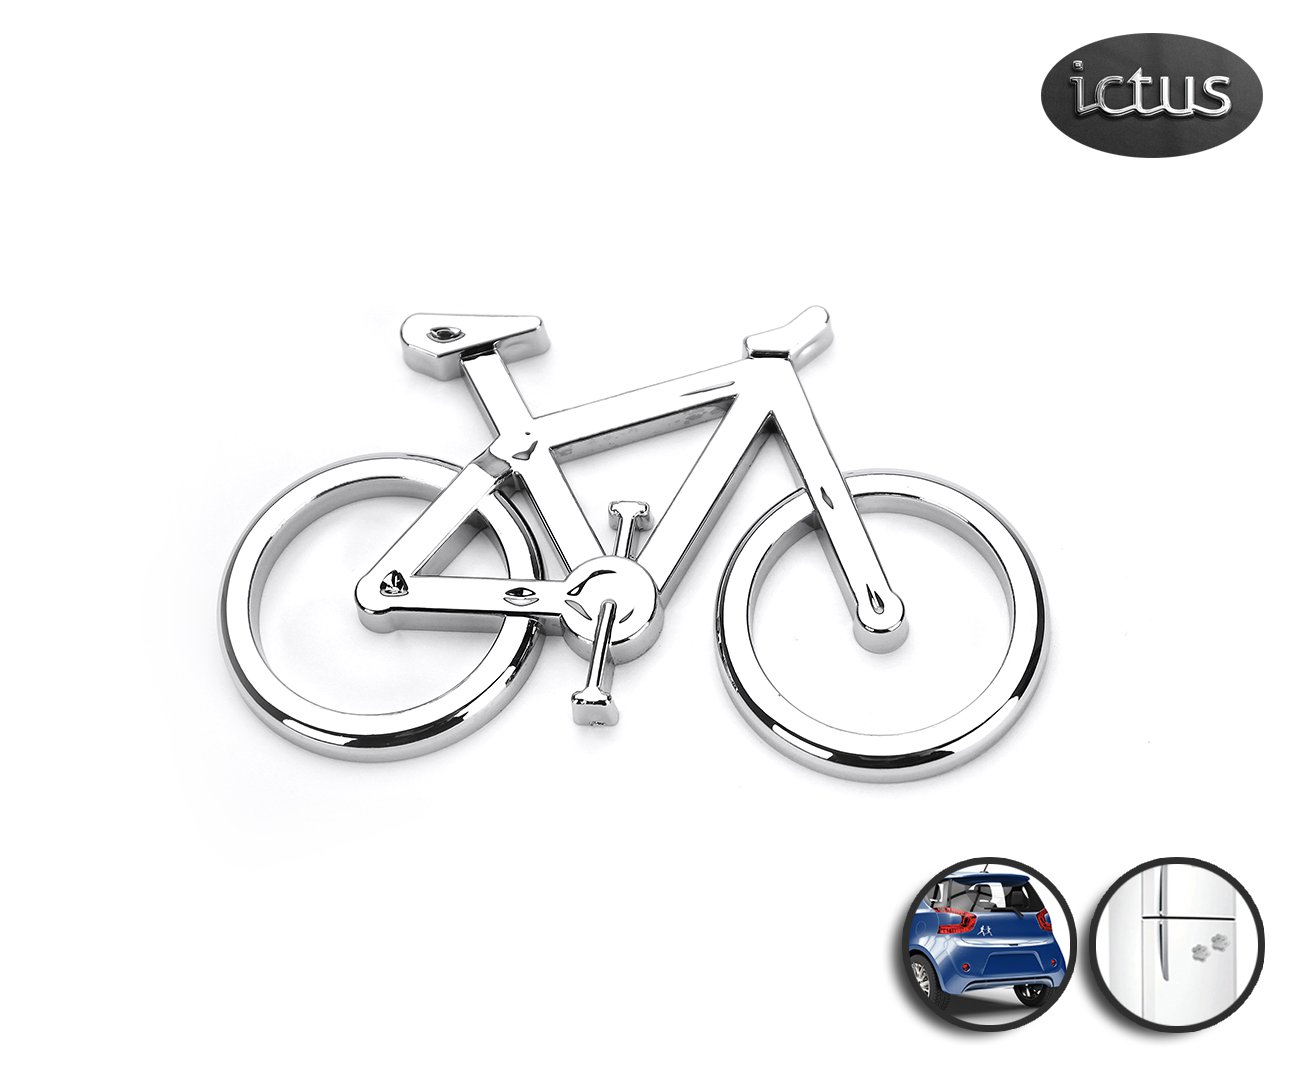 Emblema Bike - Ictus